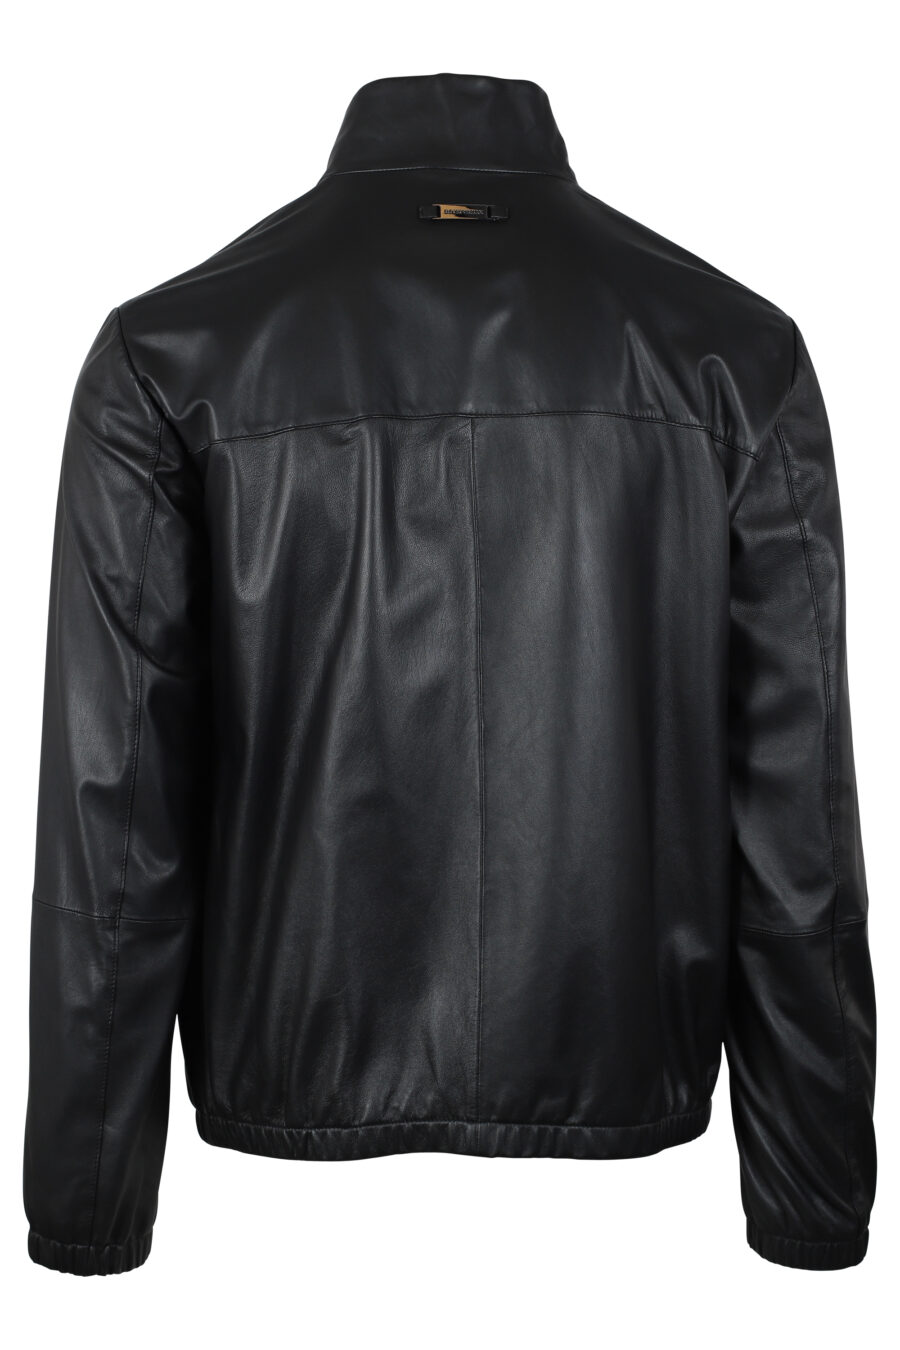 Veste en cuir noir avec mini-logo - IMG 4657